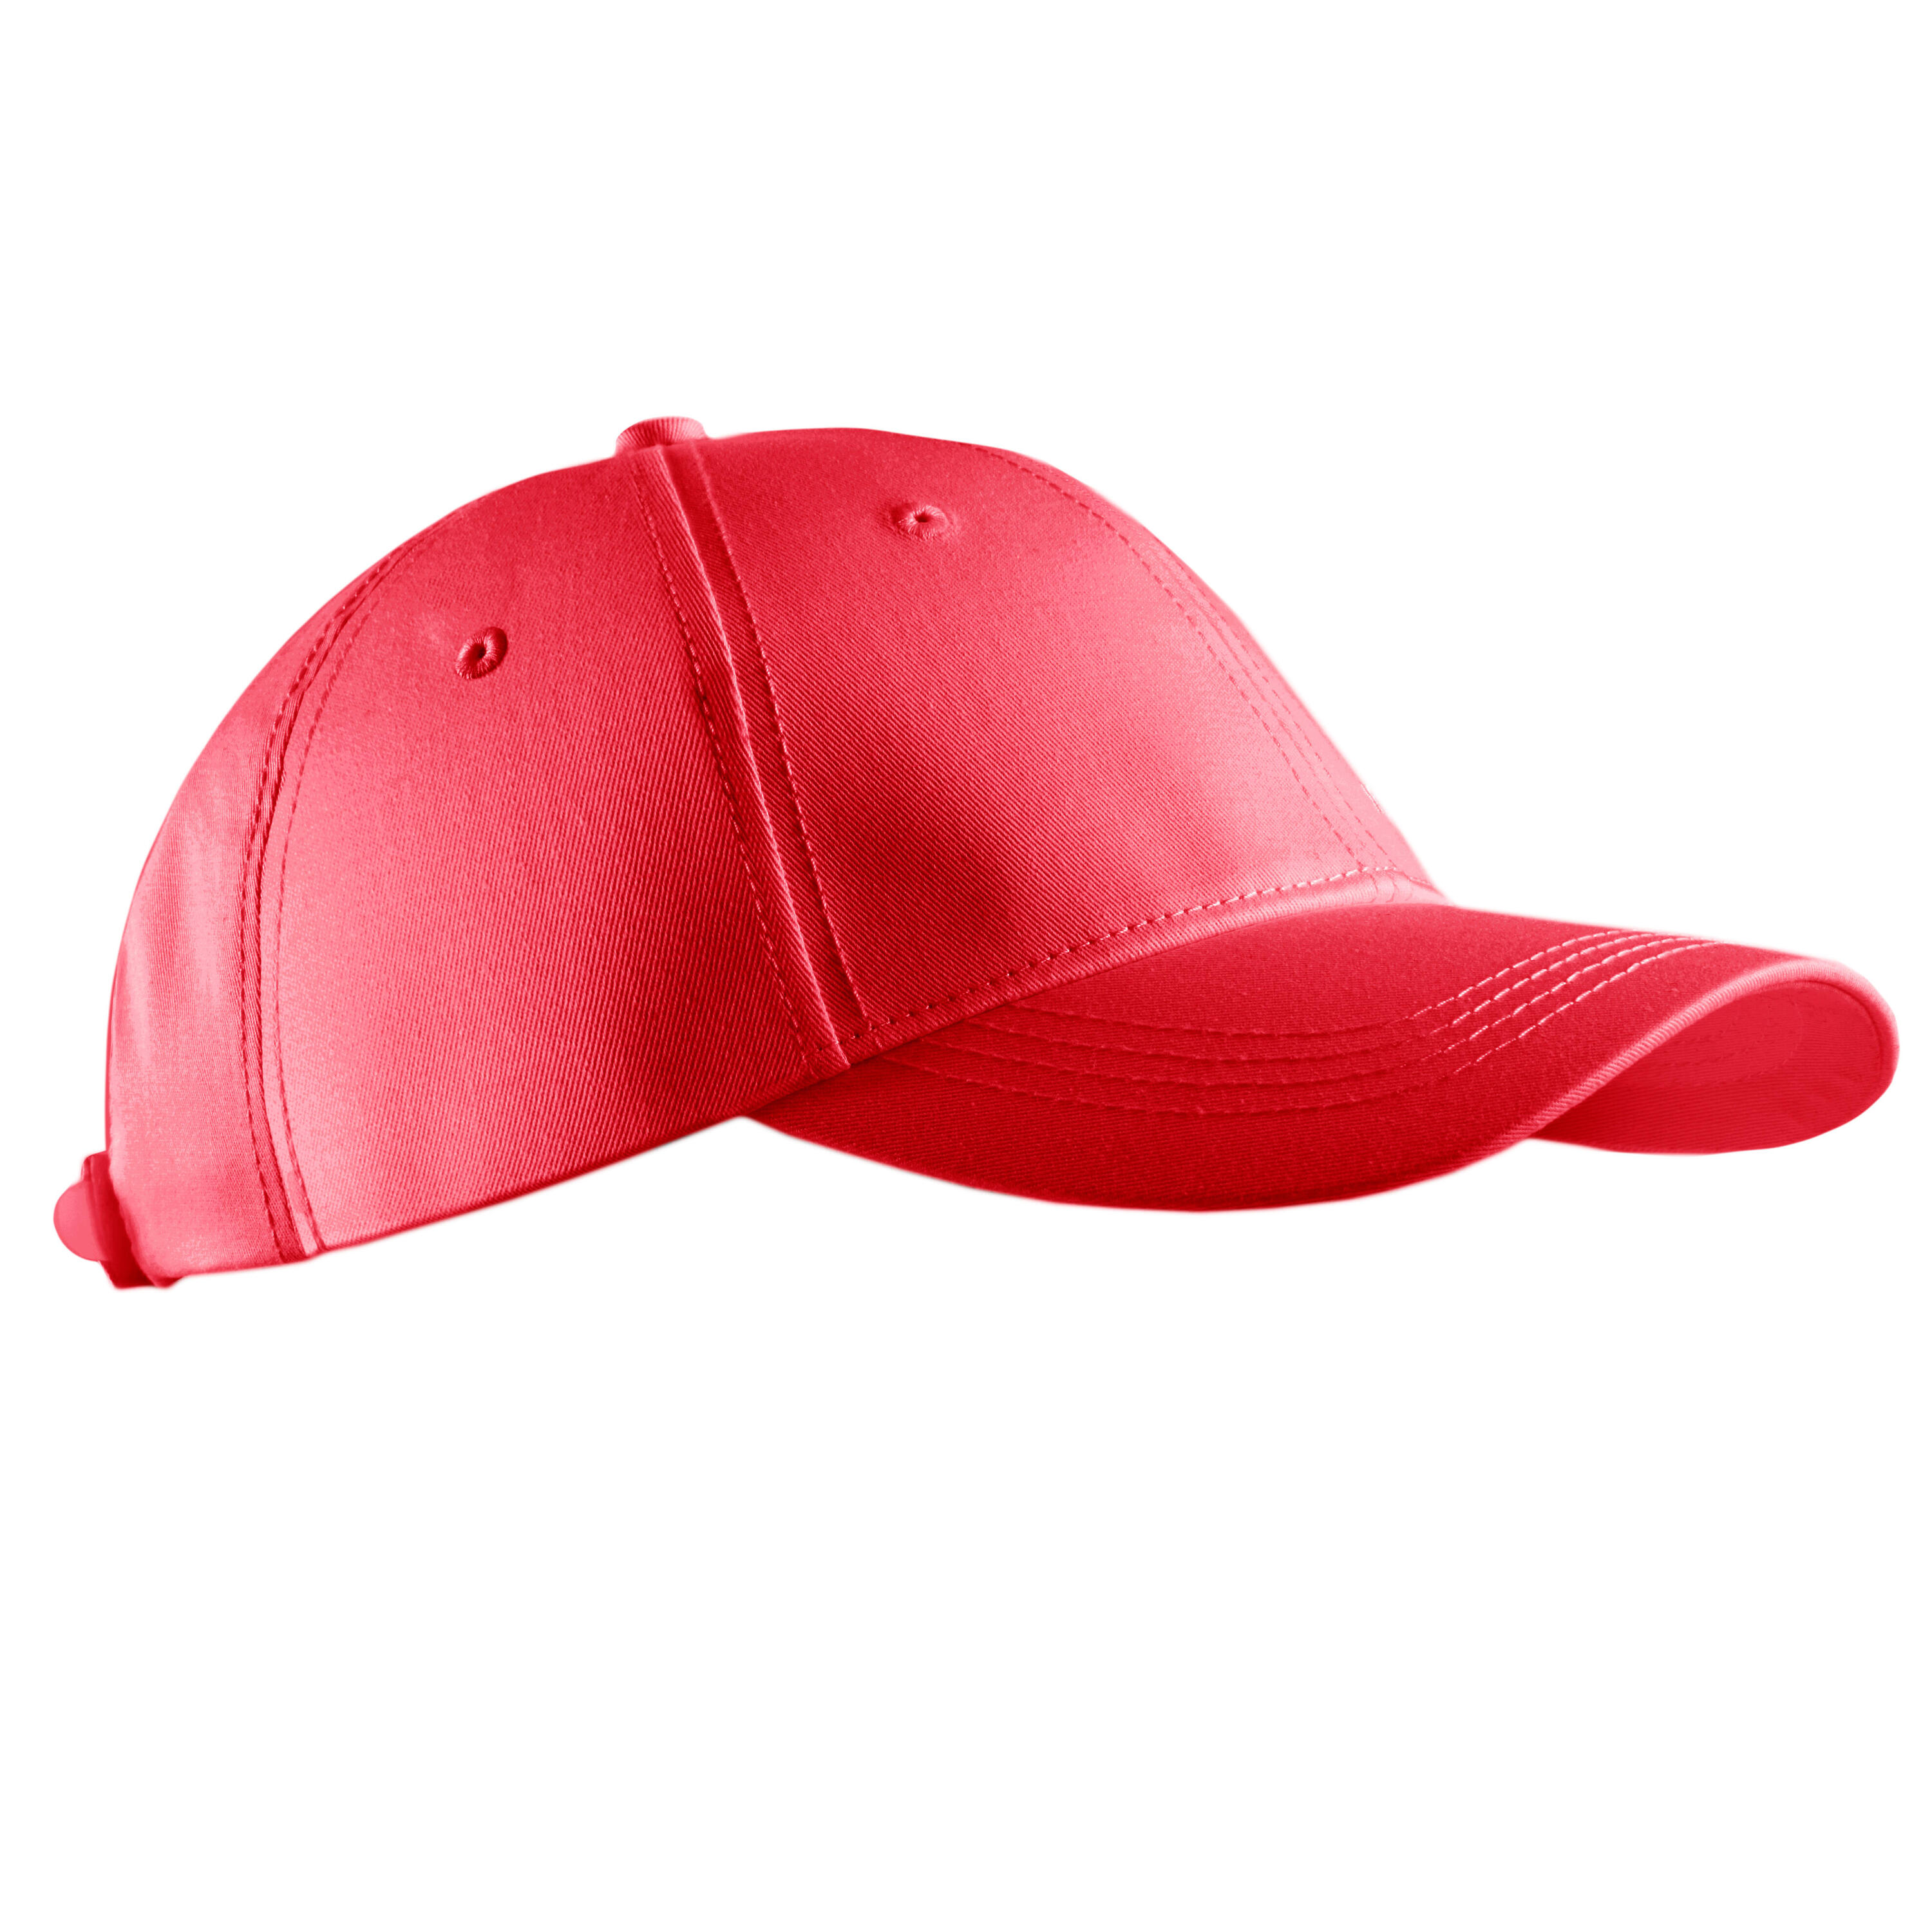 Adult's golf cap - MW 500 red 2/3